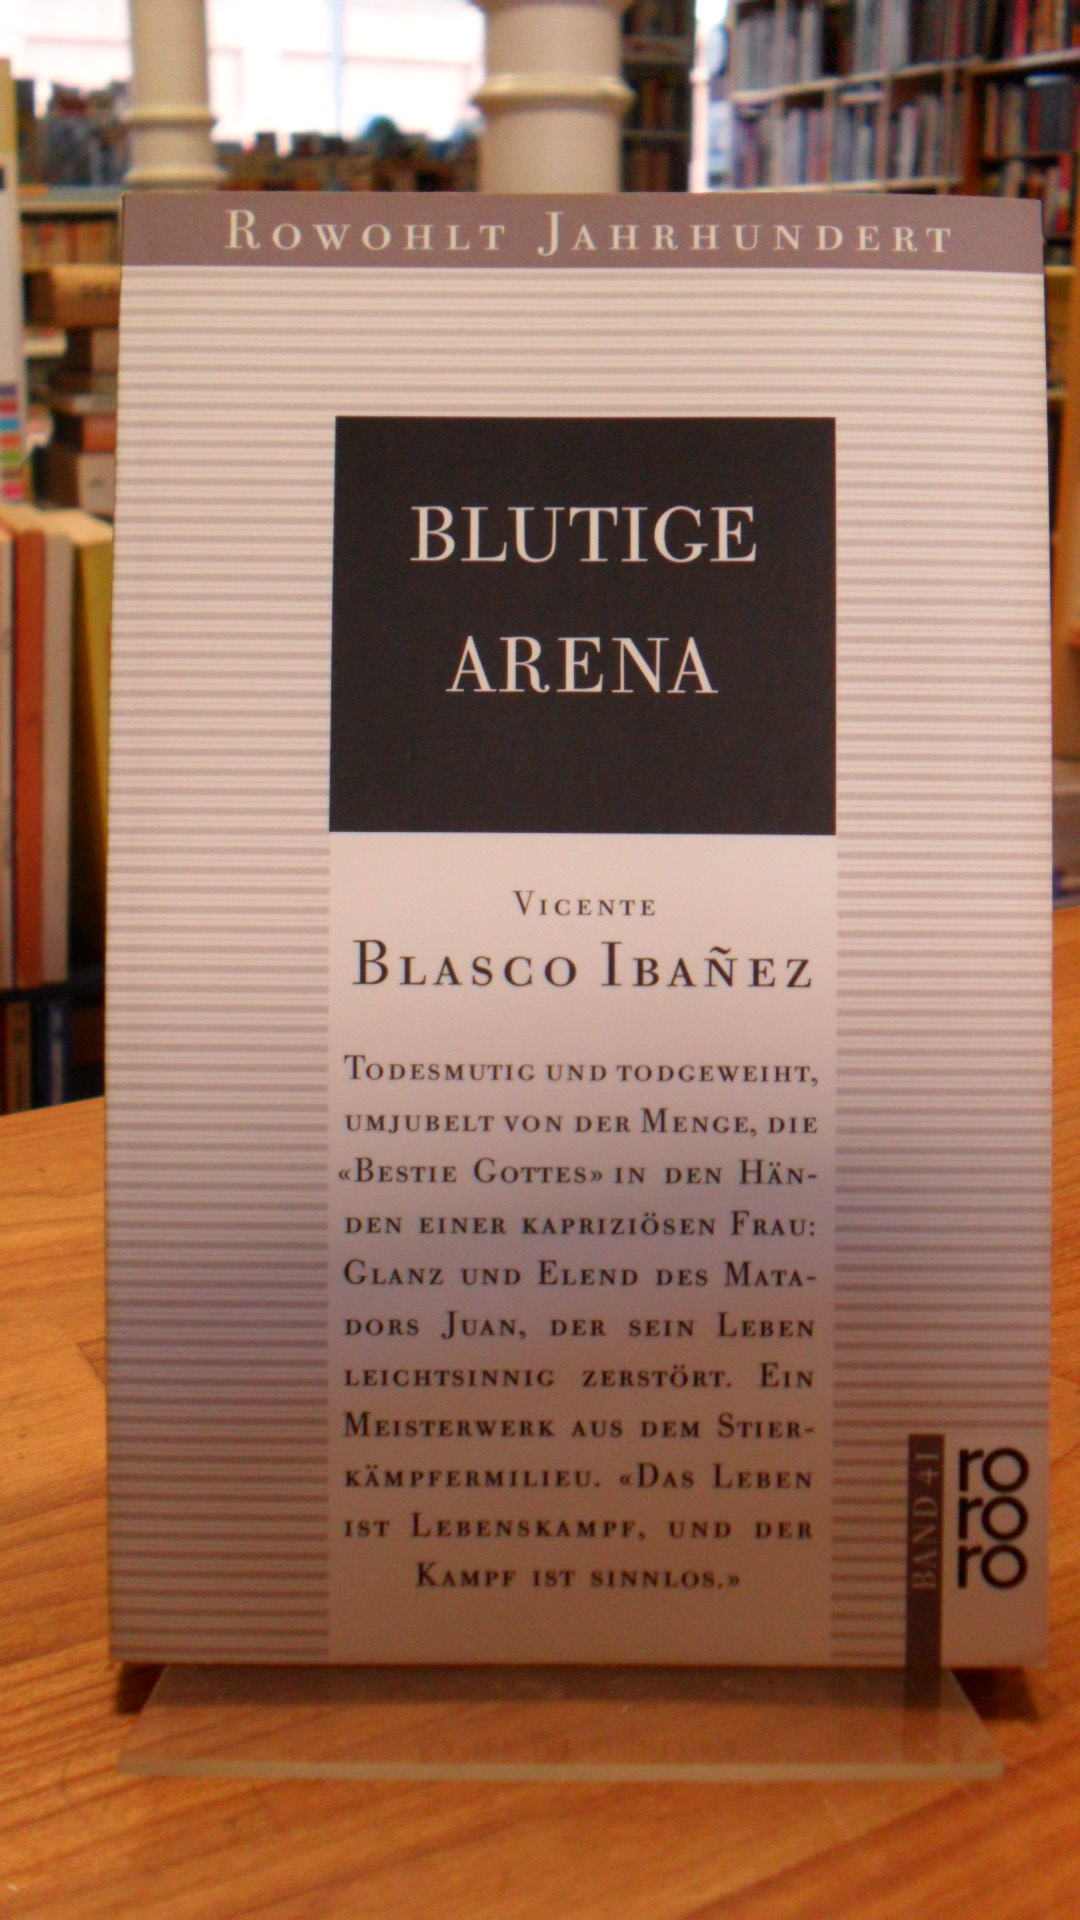 Blasco Ibáñez, Blutige Arena – Roman,